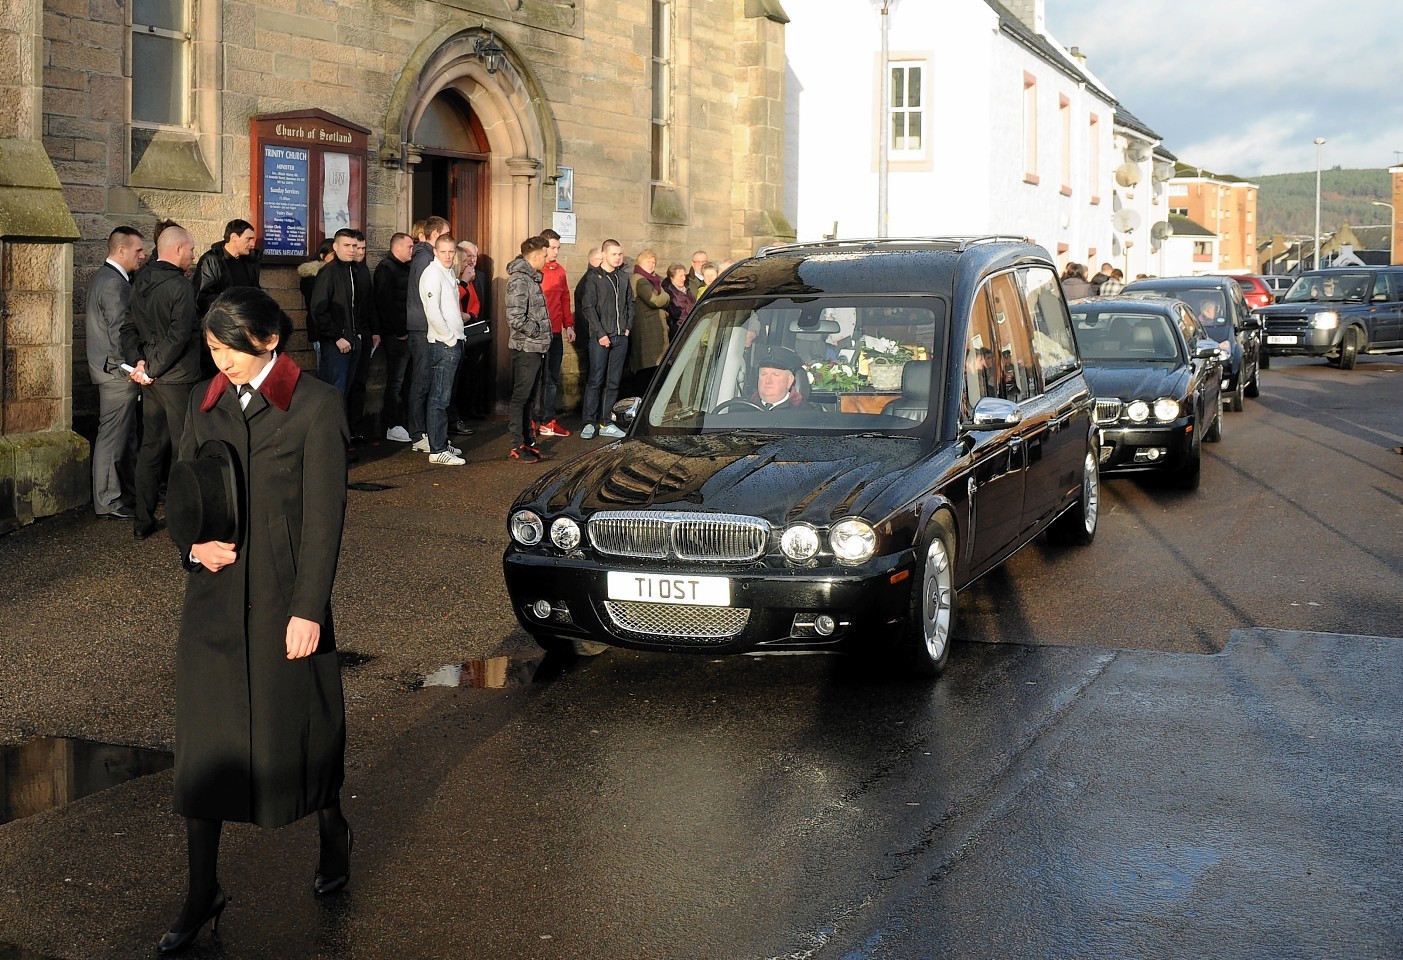 Ryan Watt's funeral